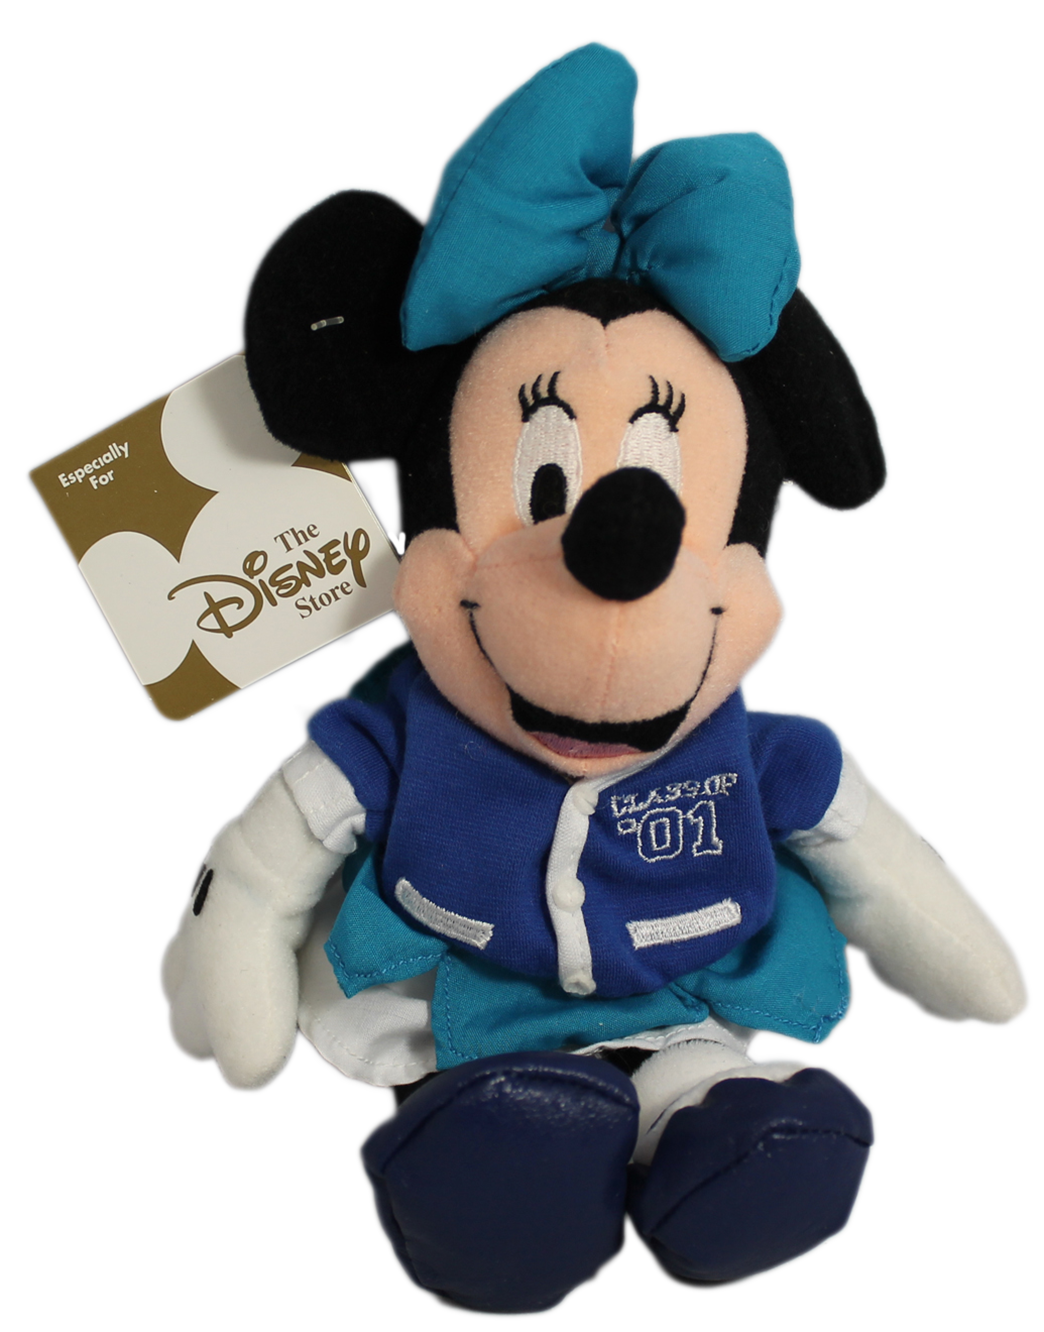 Disney Plush: Minnie Mouse in Letterman Jacket